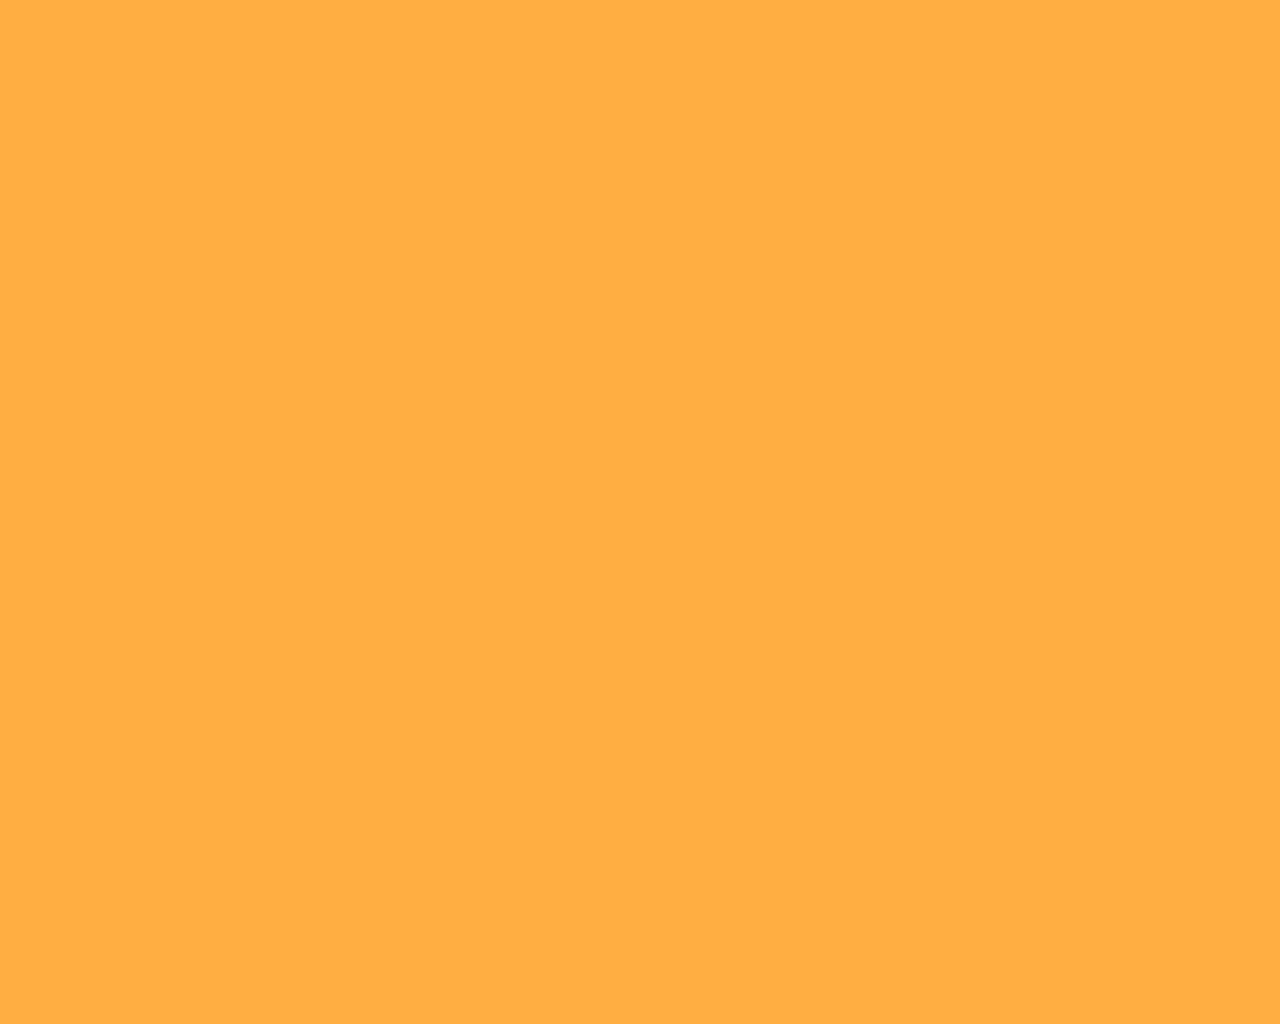 Solid Orange Background Yellow